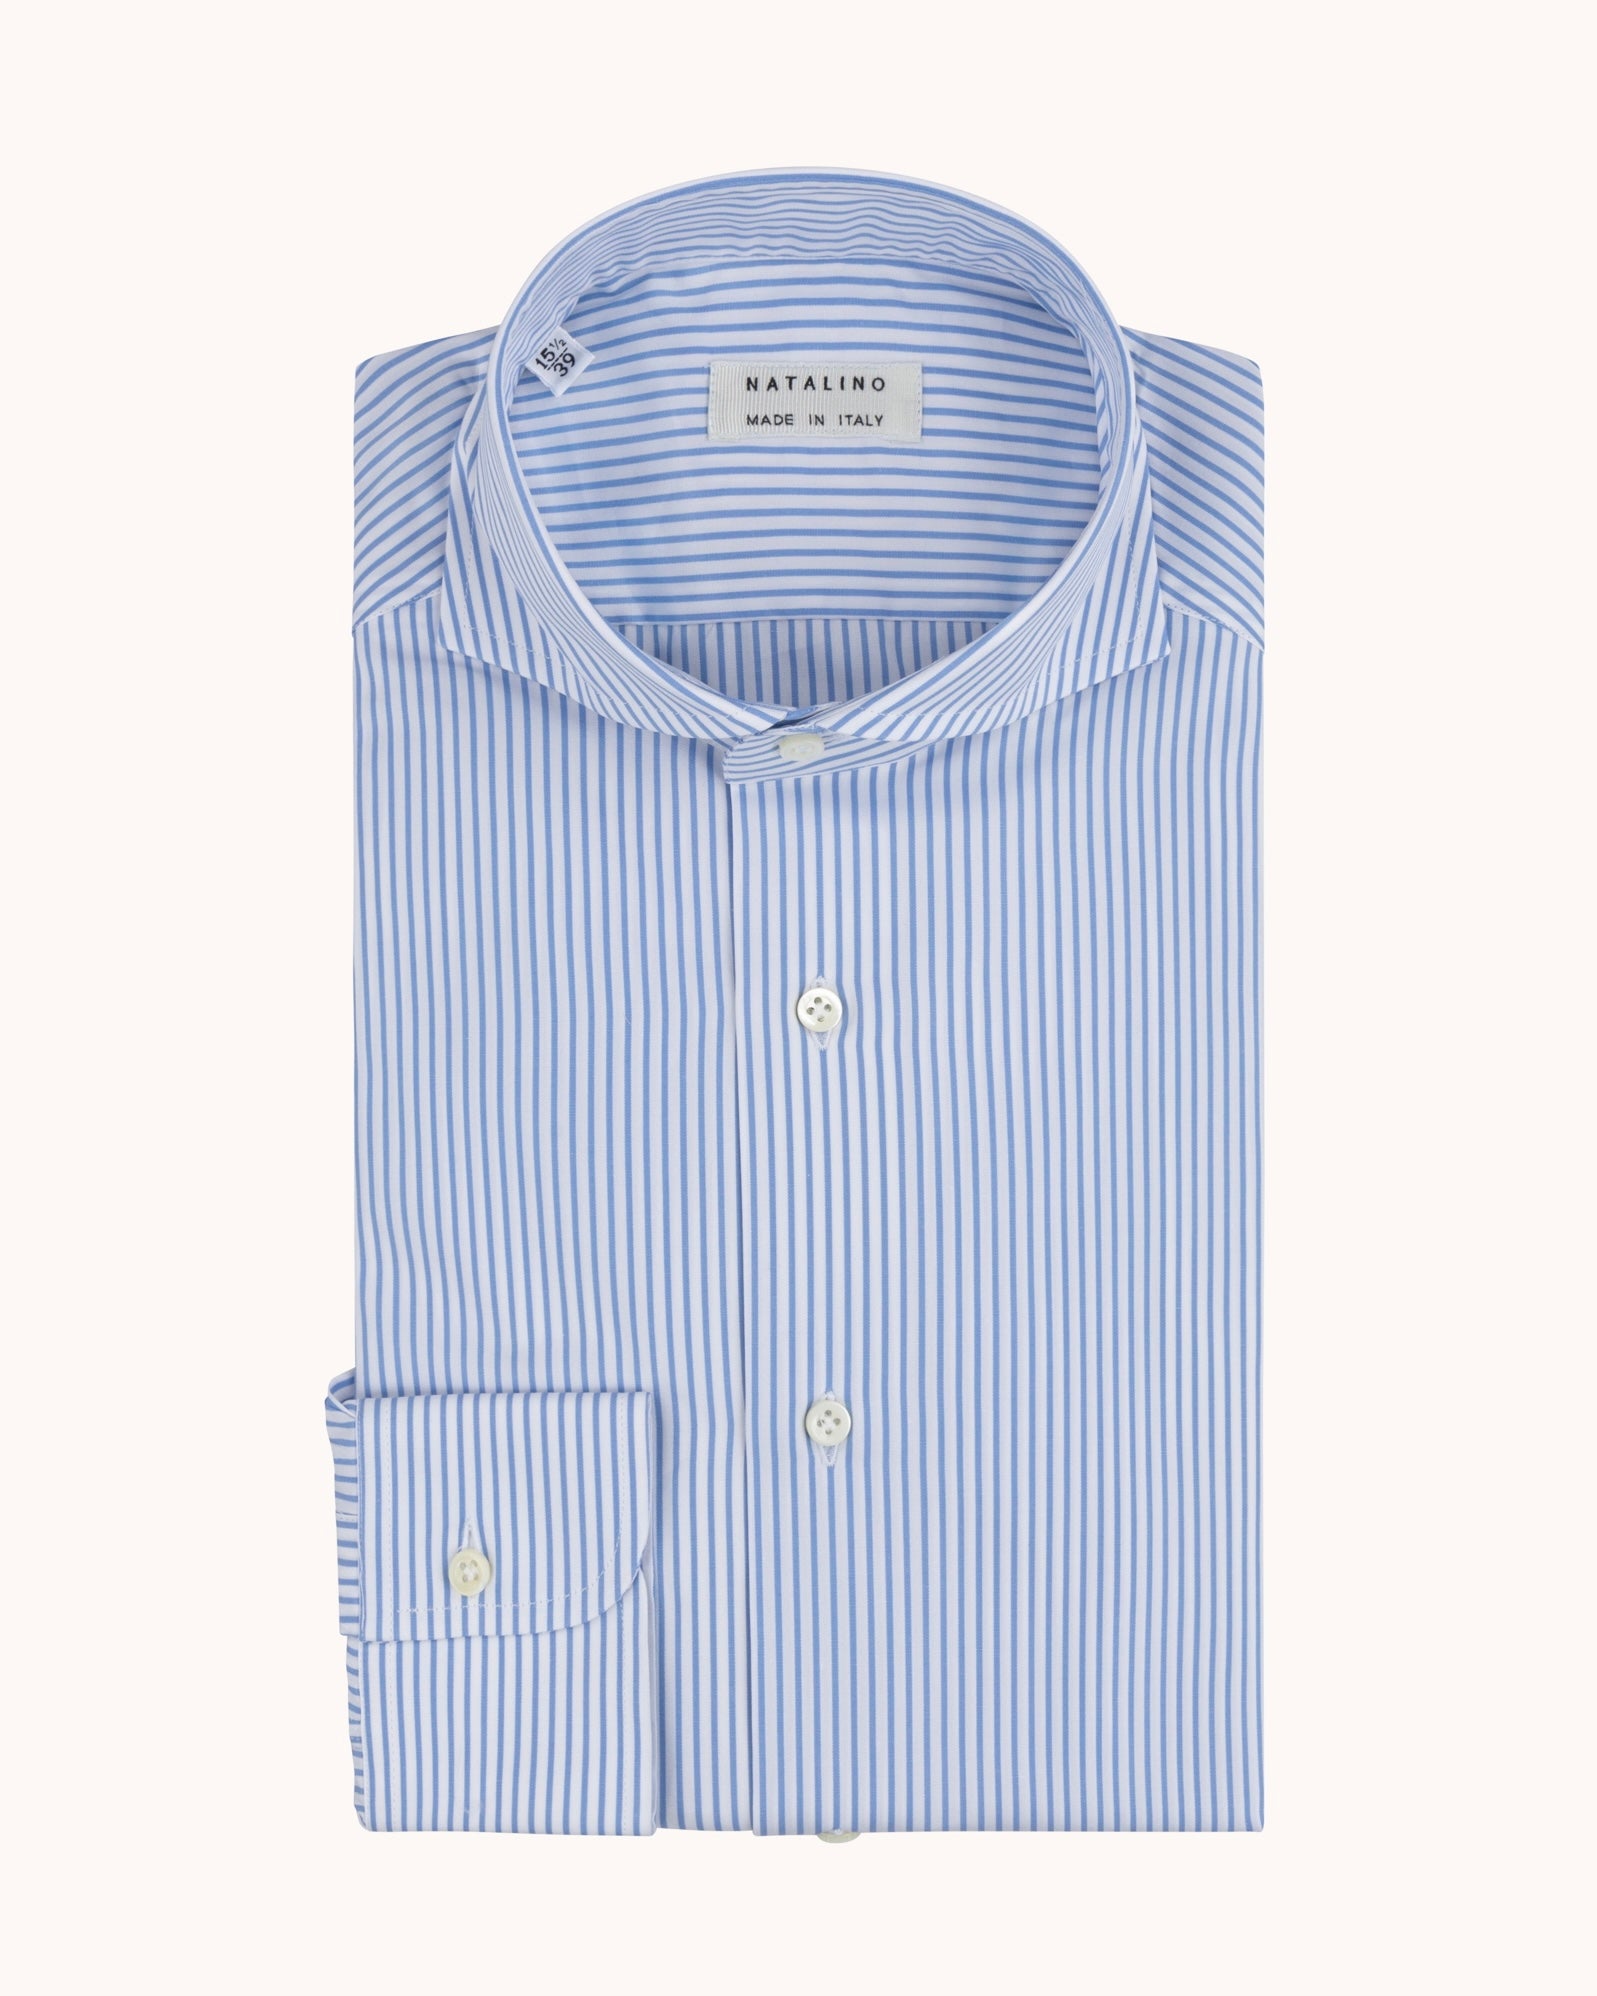 Spread Collar Shirt - Blue Stripe Cotton Poplin